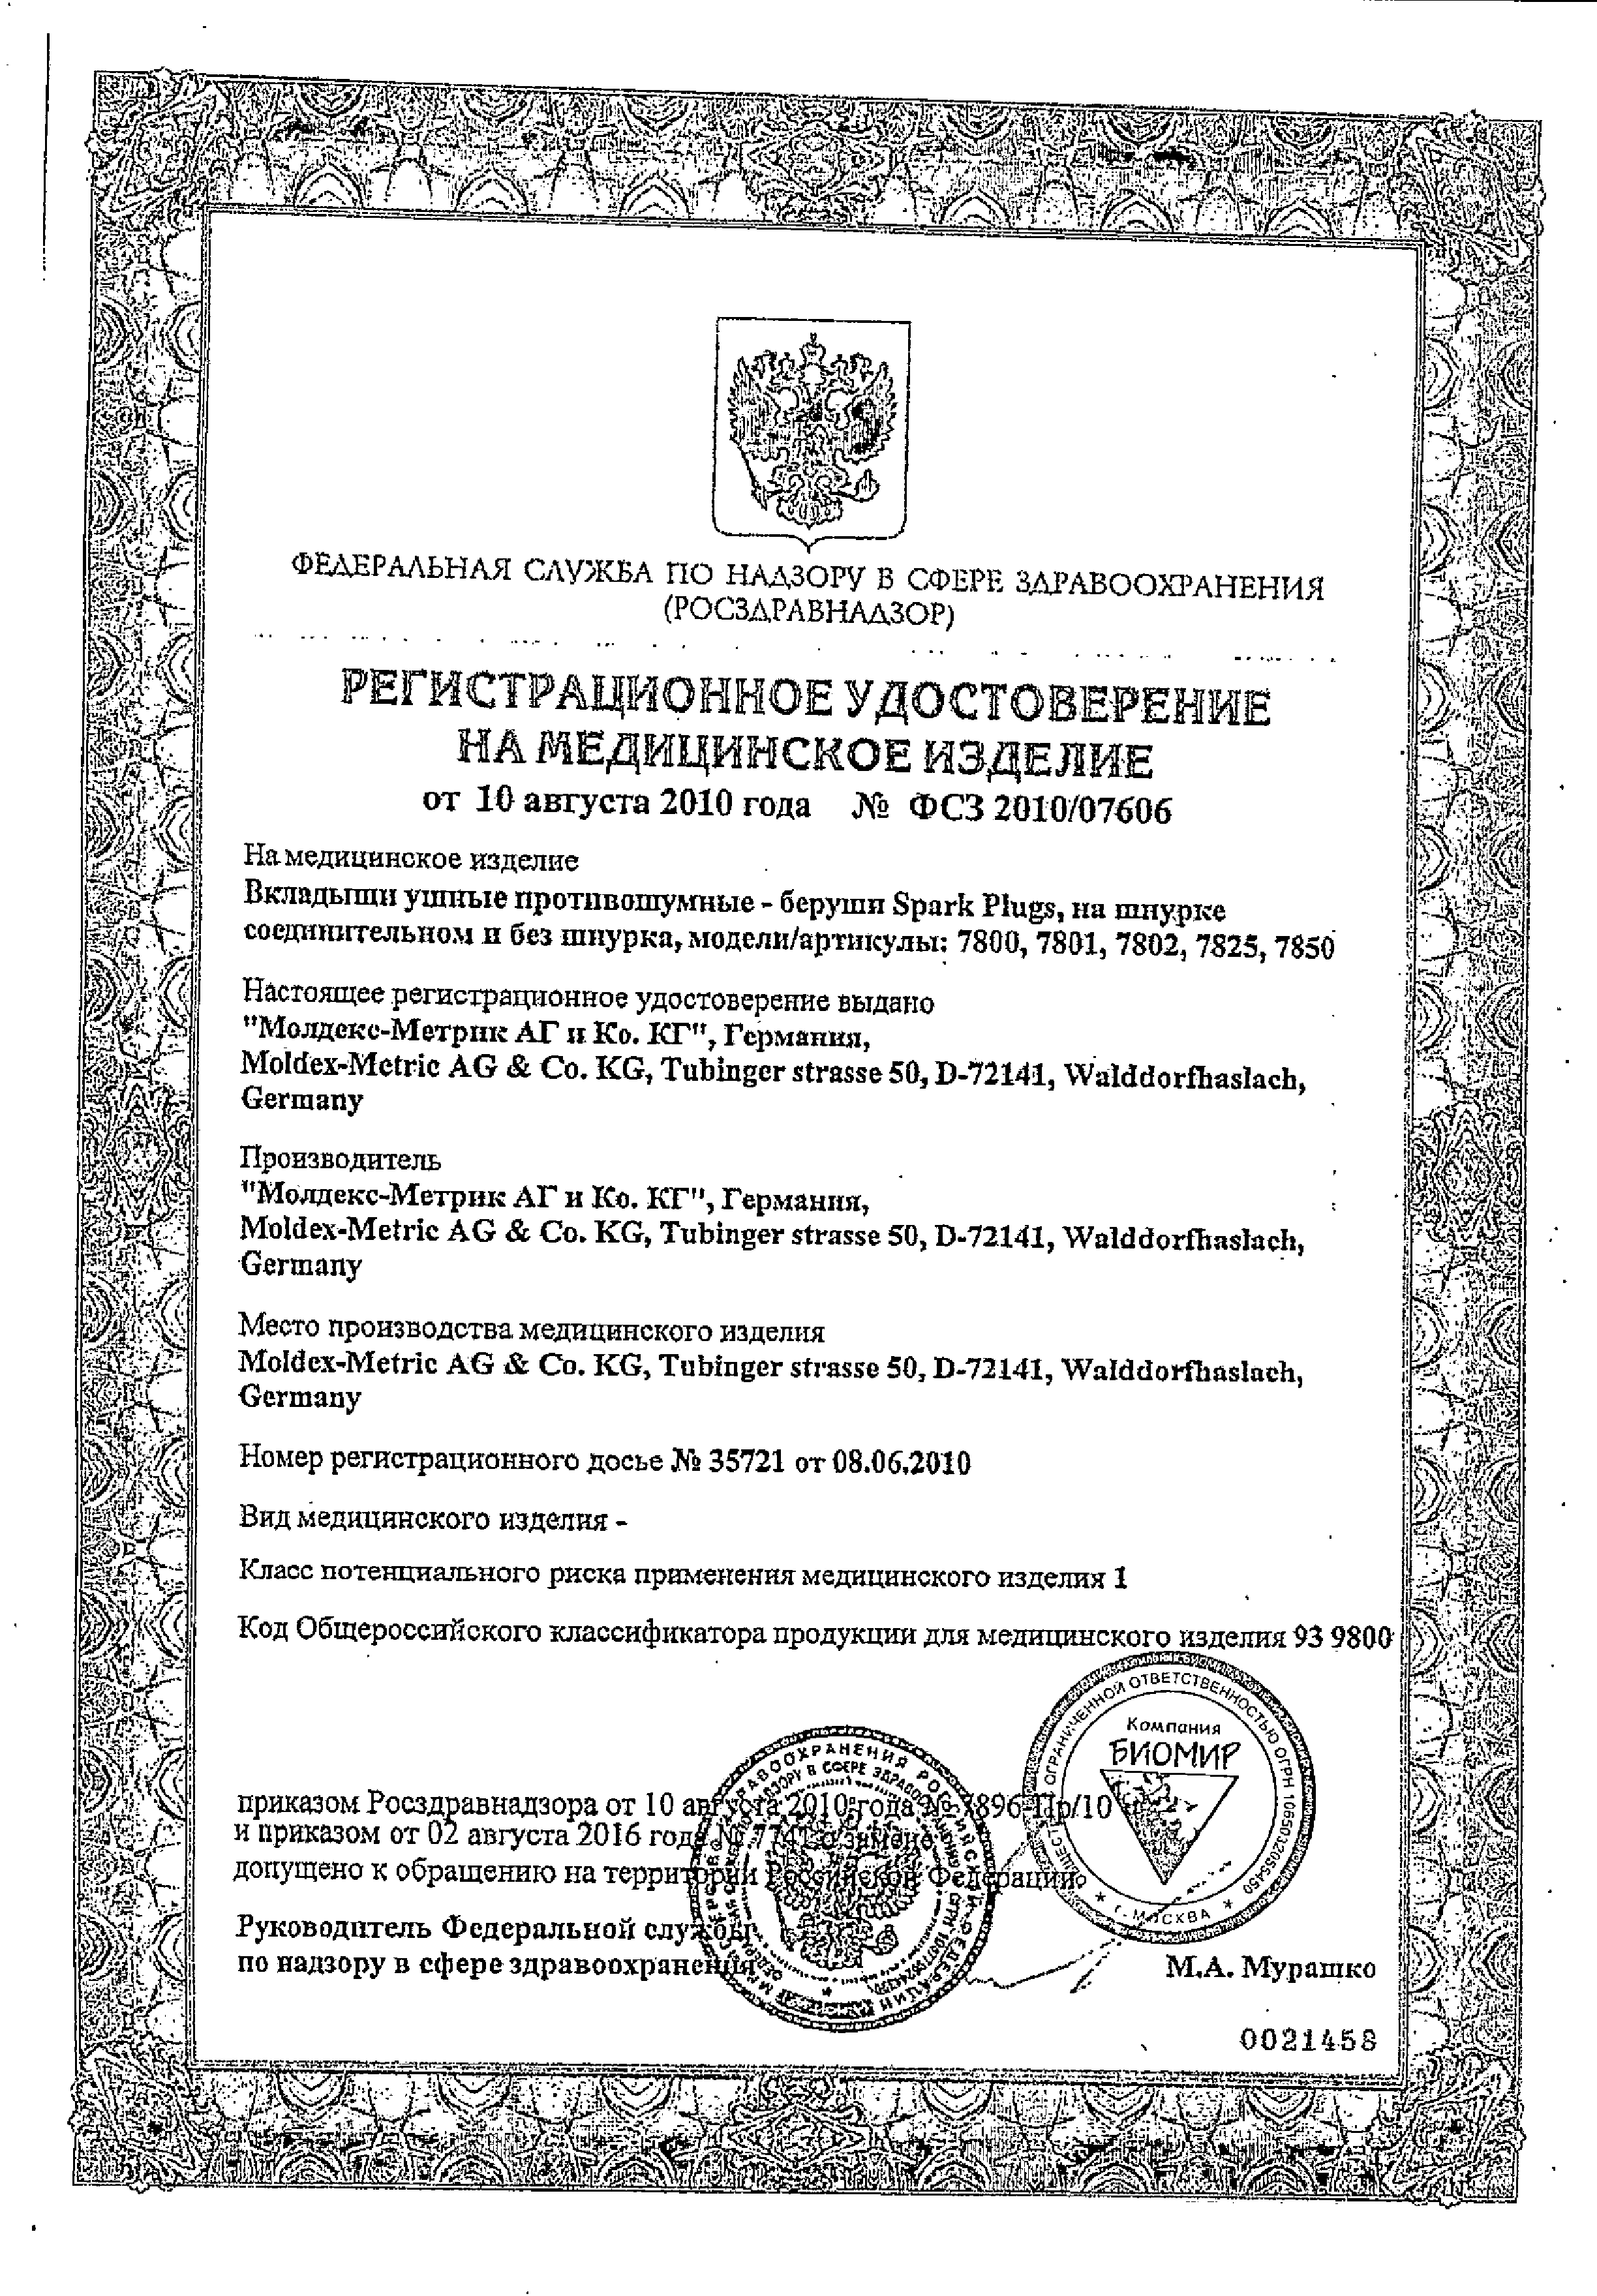 Беруши Moldex Pocketpack сертификат